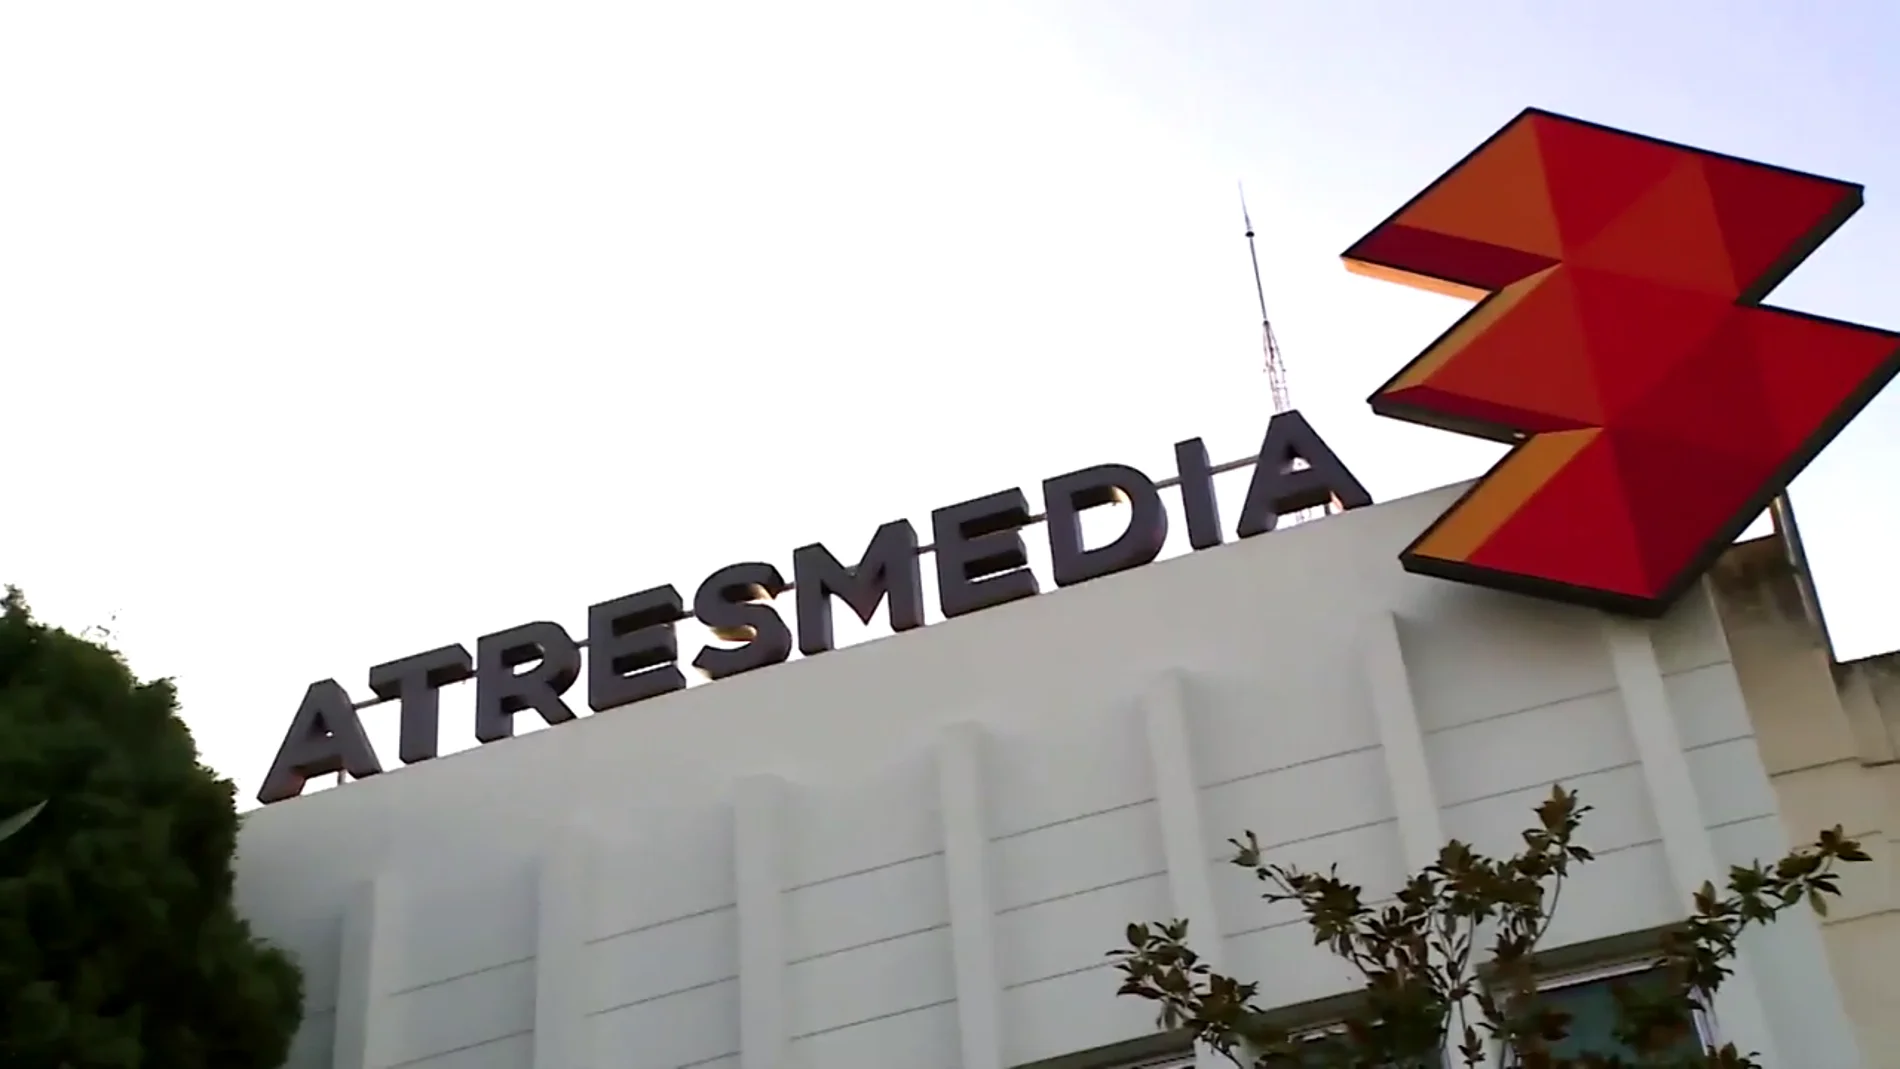 Atresmedia suma seis años seguidos como grupo audiovisual líder en Internet, con 25,6 millones de visitantes únicos en abril